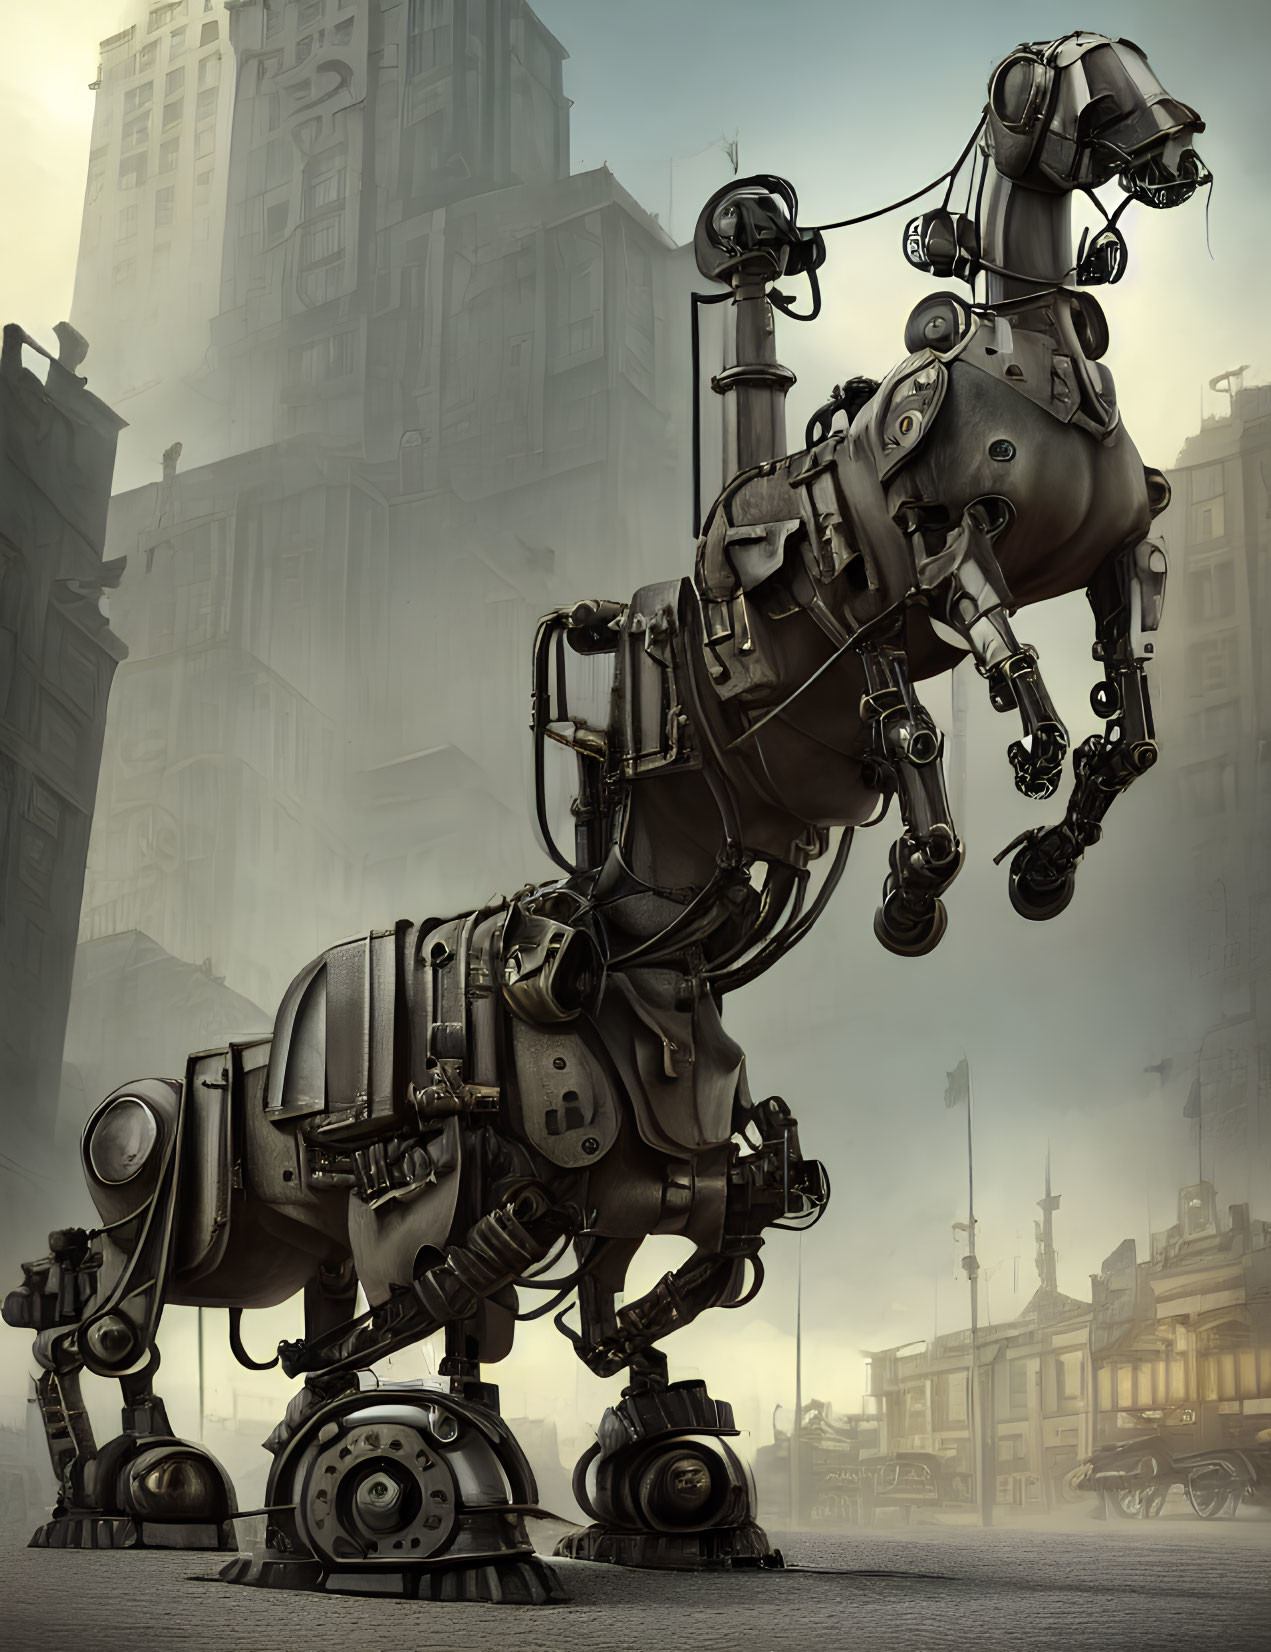 Intricate steampunk mechanical horse in urban foggy setting